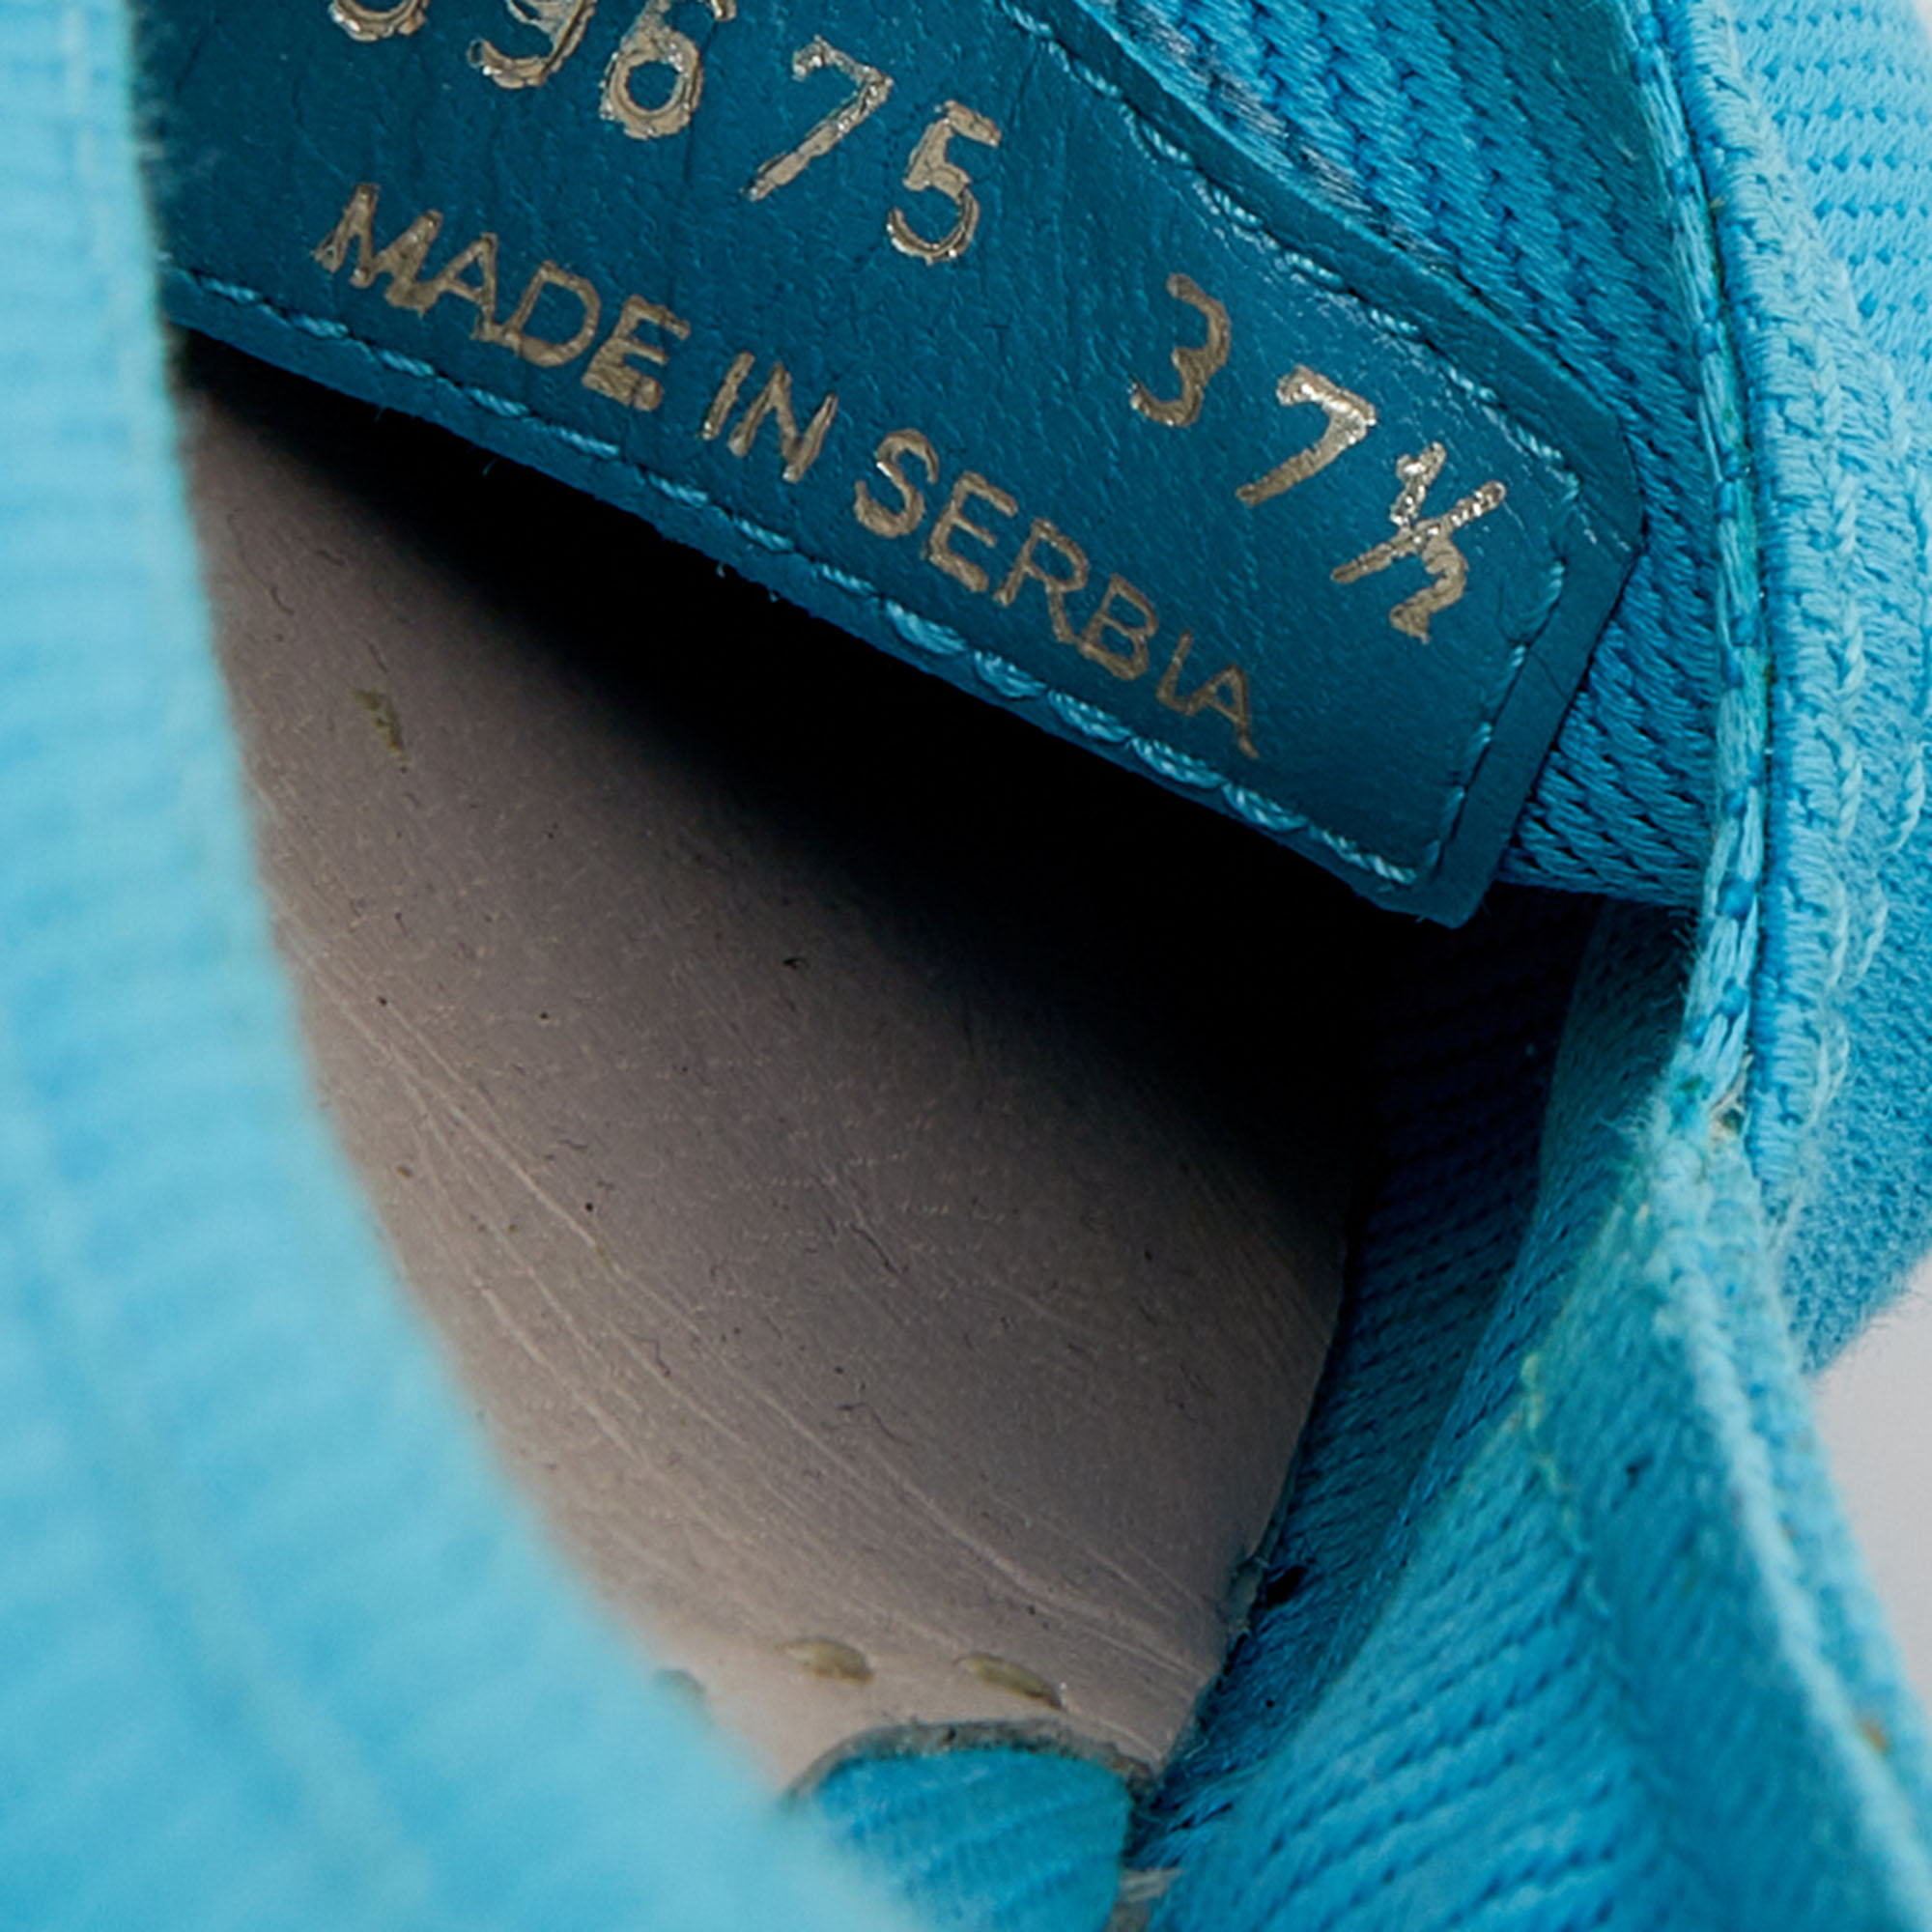 Miu Miu Blue Canvas Metal Cap Toe Slip On Sneakers Size 37.5